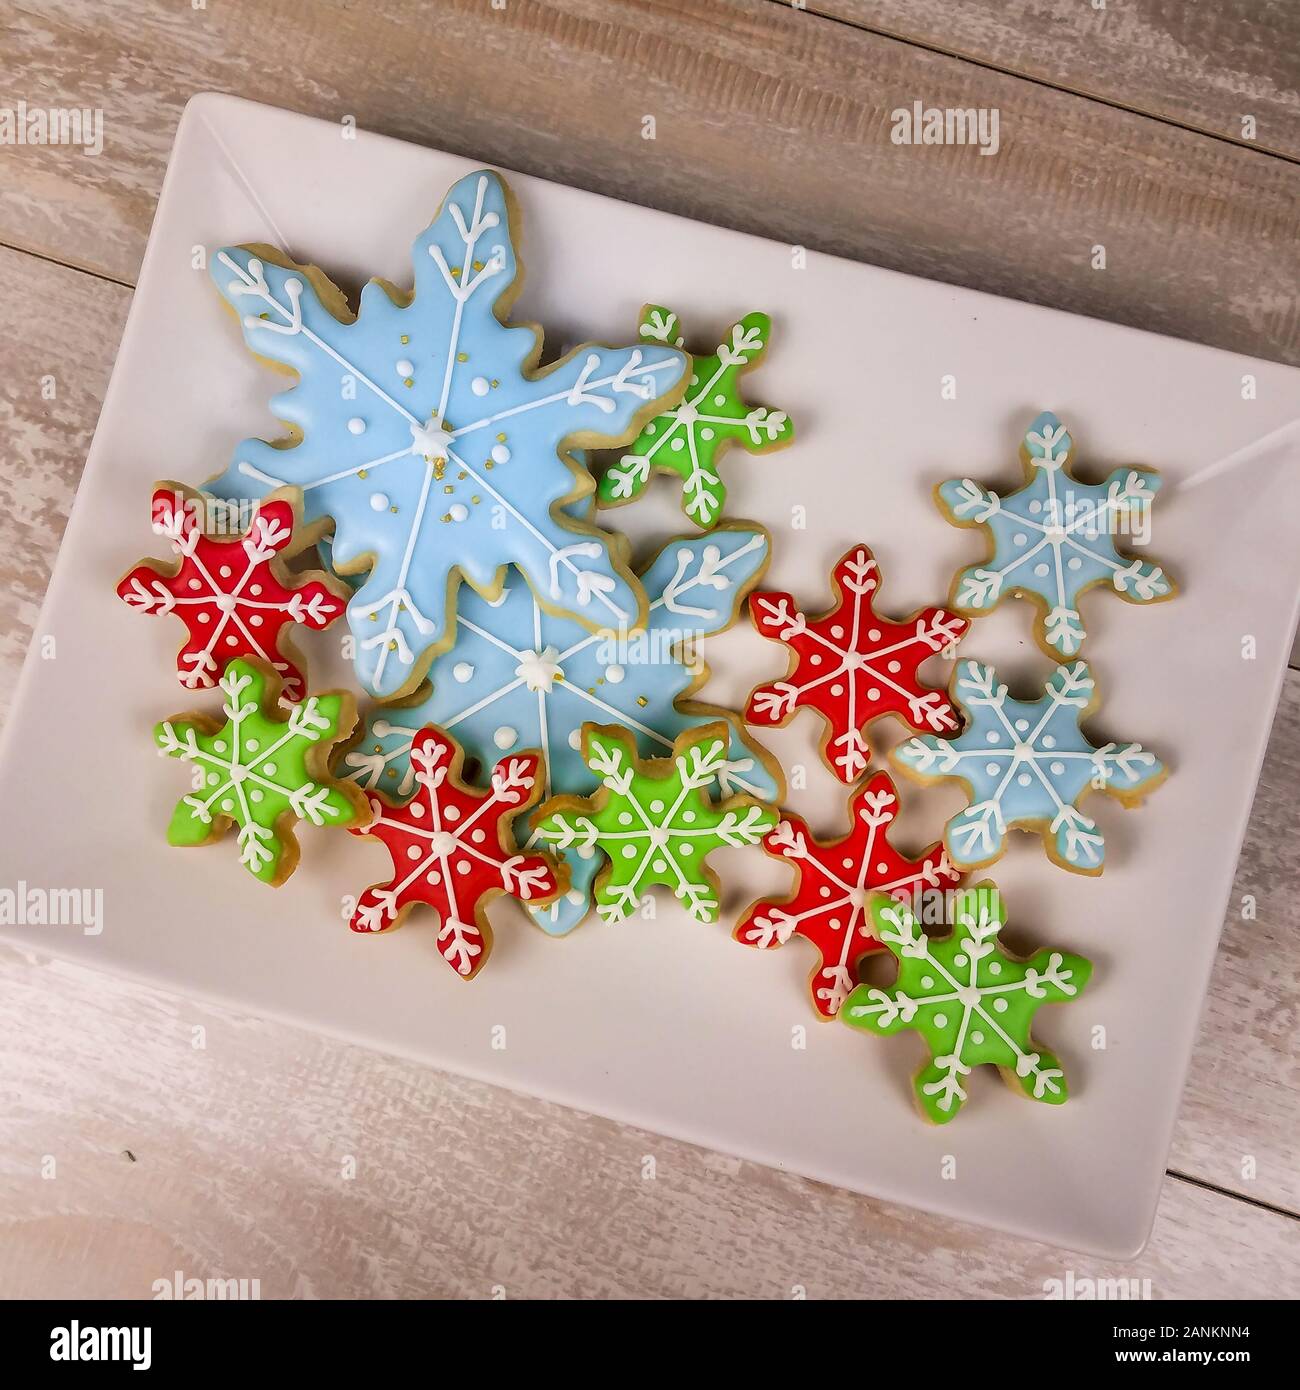 https://c8.alamy.com/comp/2ANKNN4/close-top-down-view-of-mini-snowflake-sugar-cookies-for-winter-or-christmas-2ANKNN4.jpg